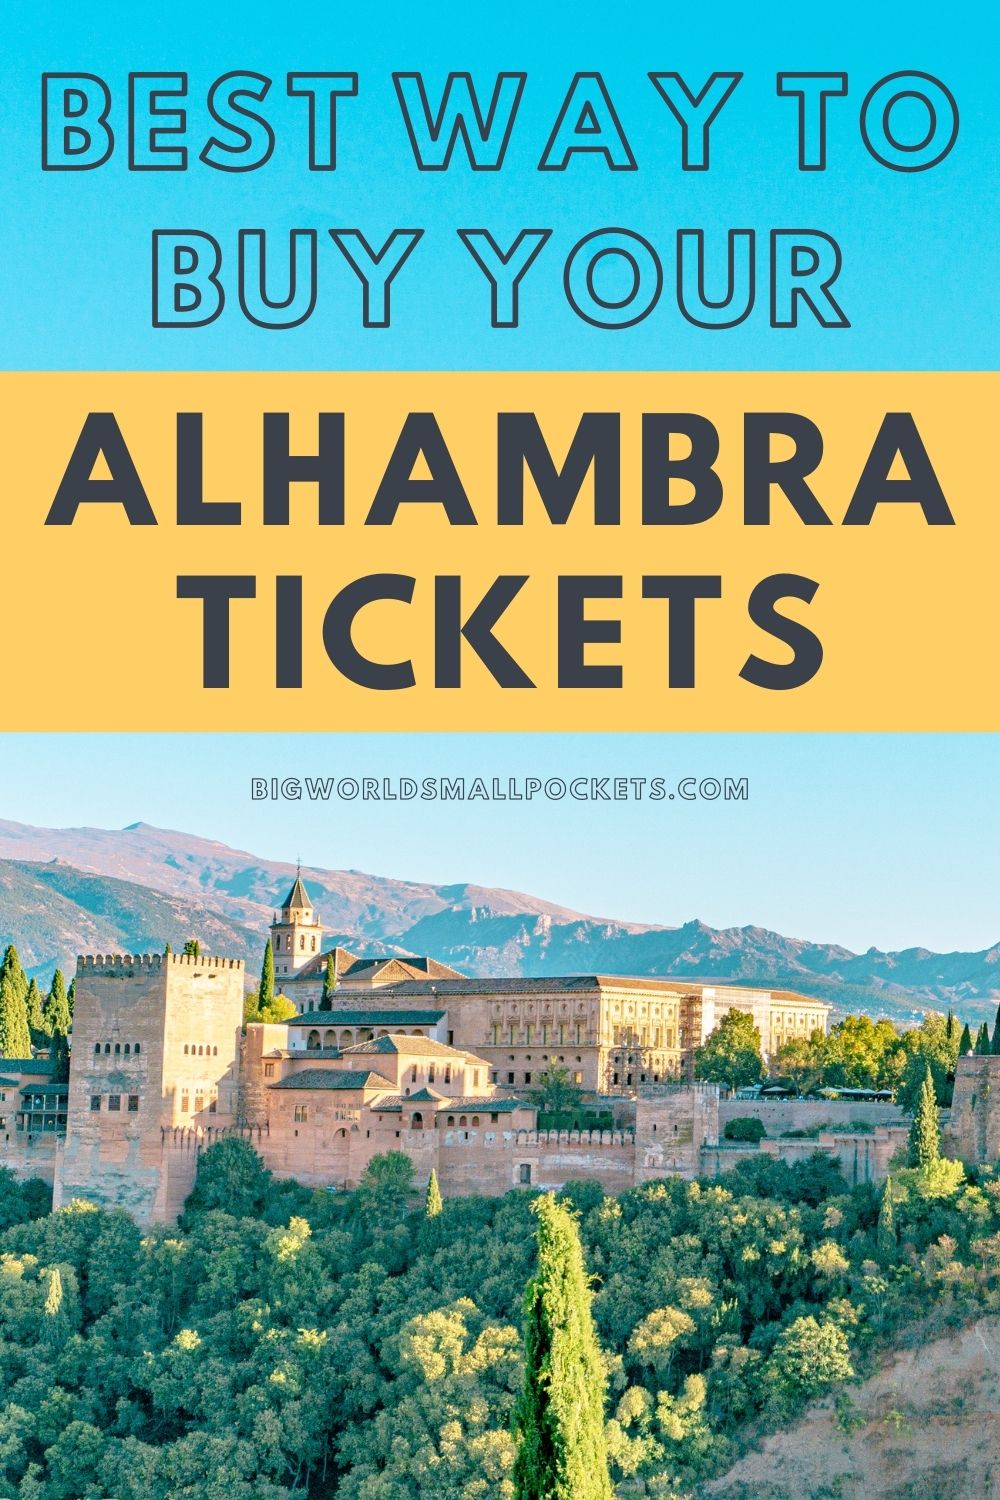 Best Way to Buy Your Alhambra Tickets in Granada, Spain